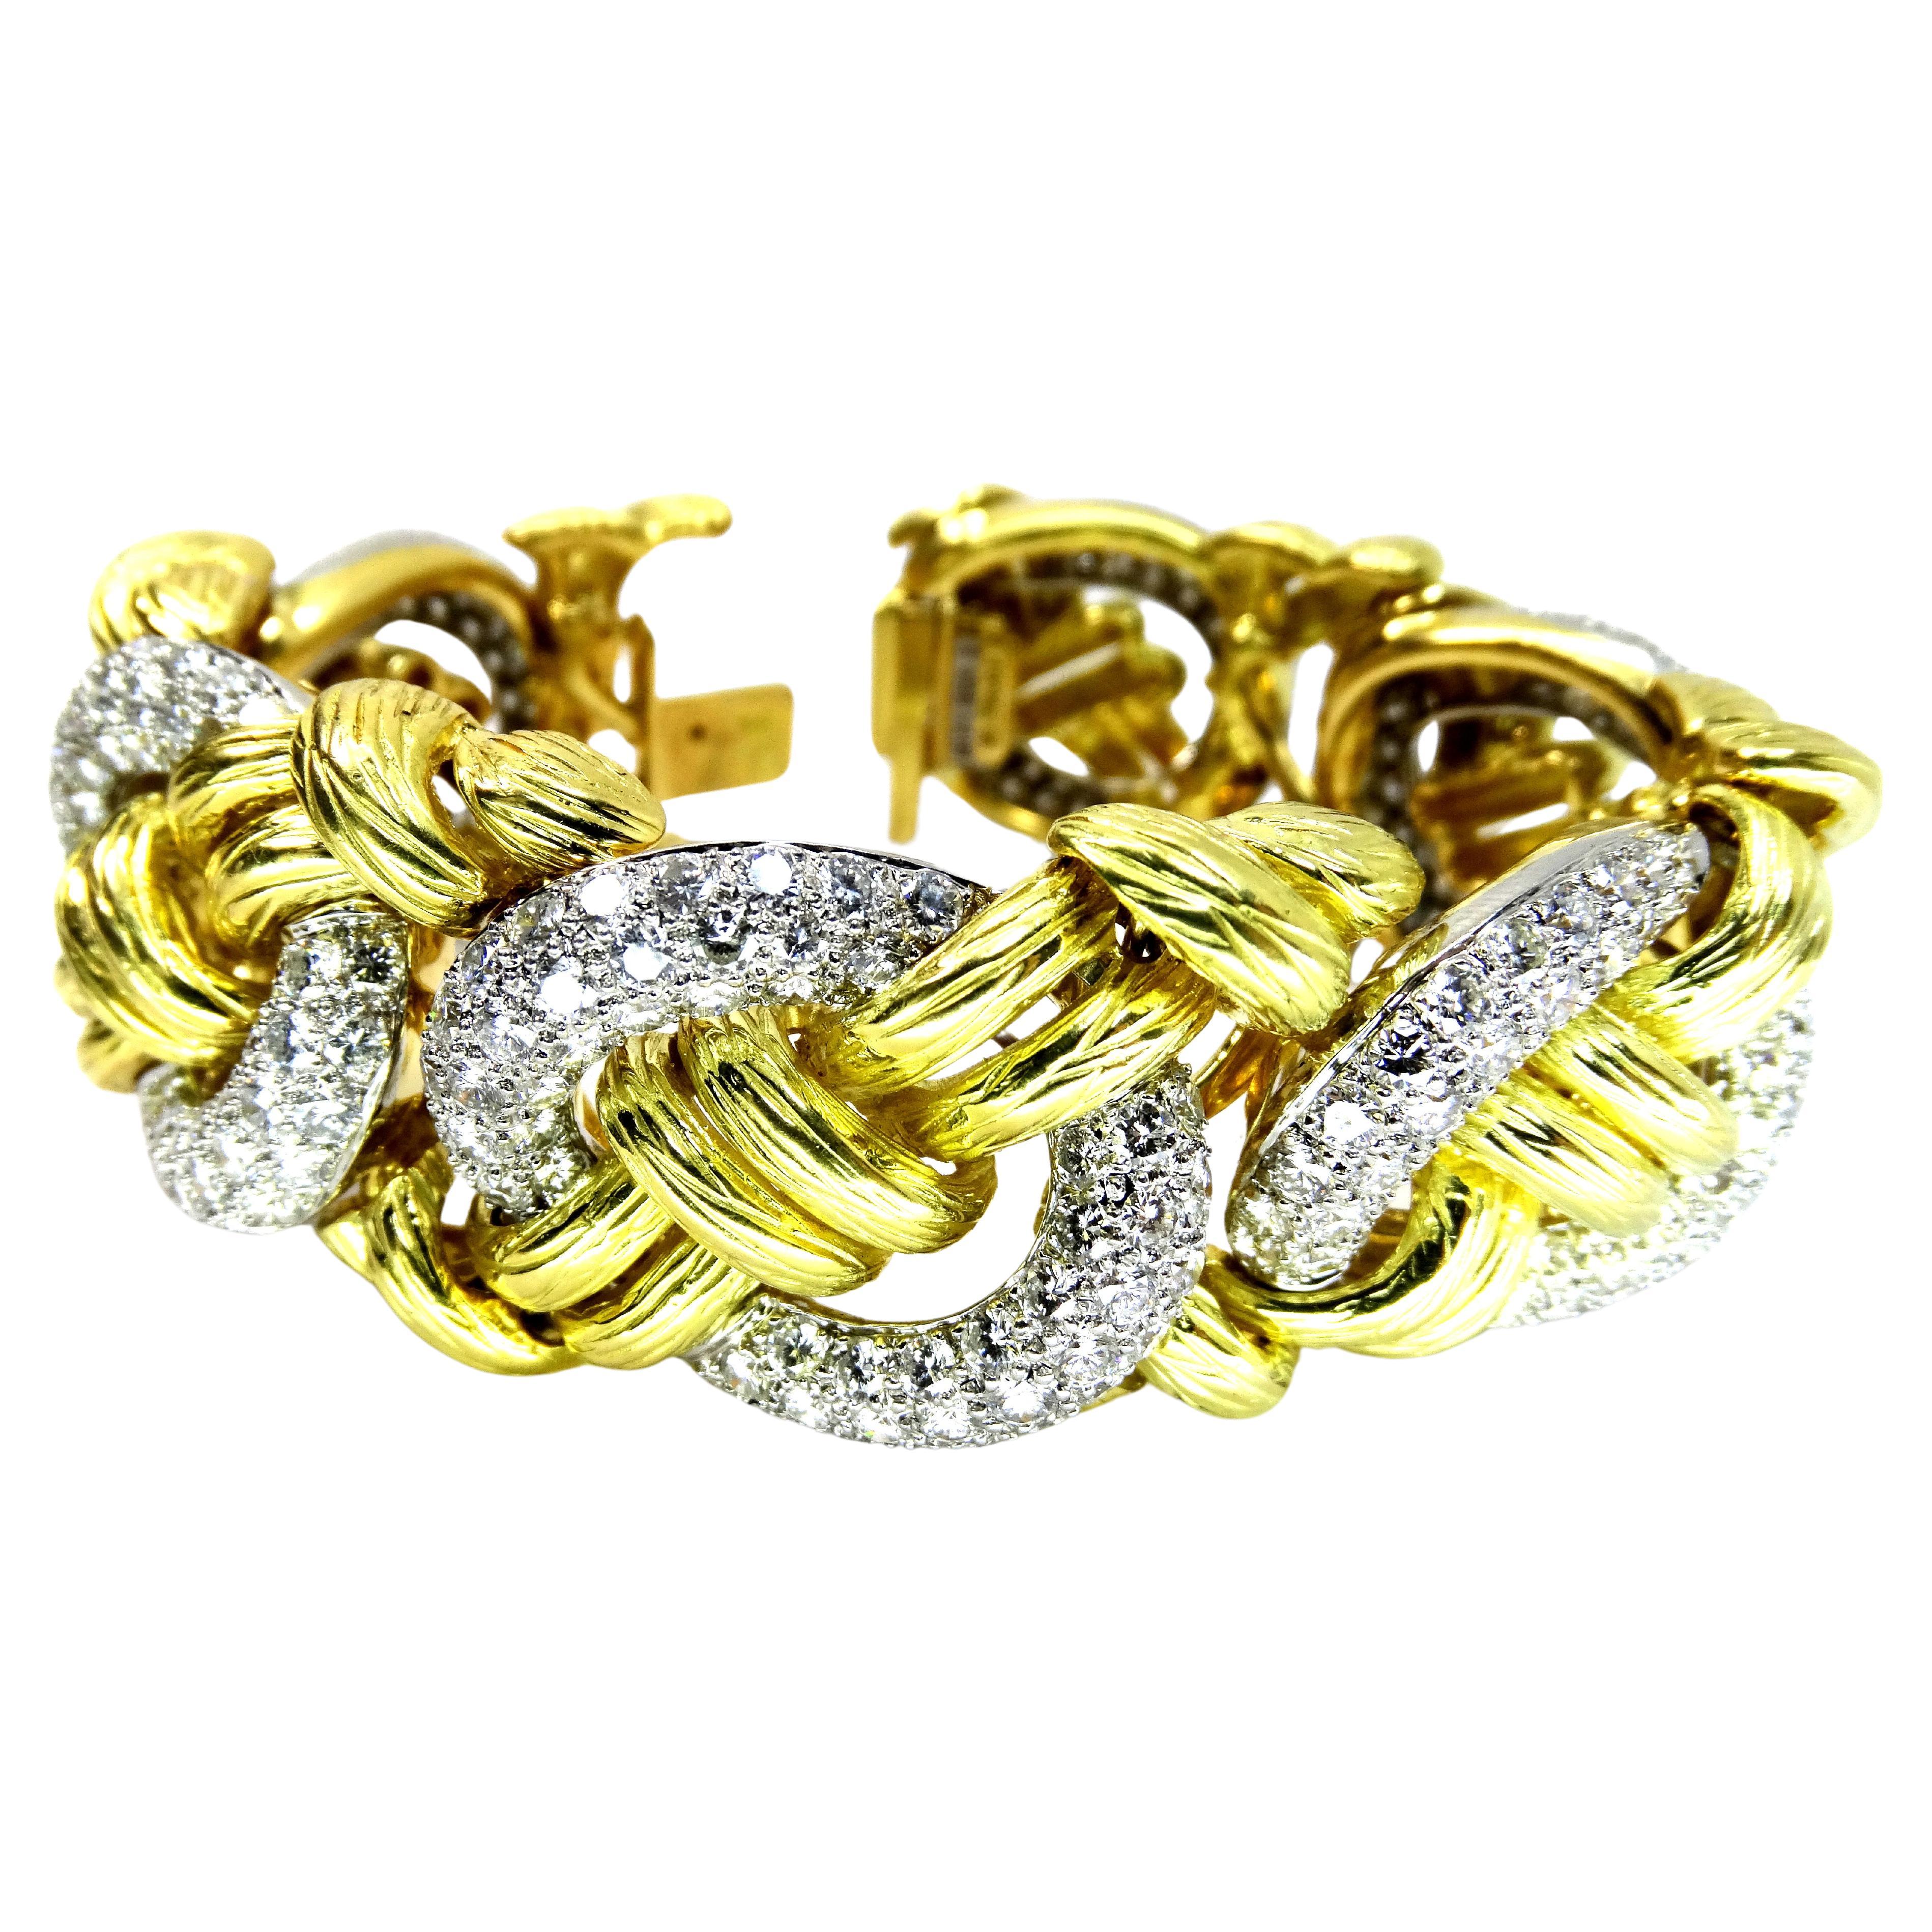 Hammerman Jewels Gold/Platinum Bracelet with Diamonds For Sale